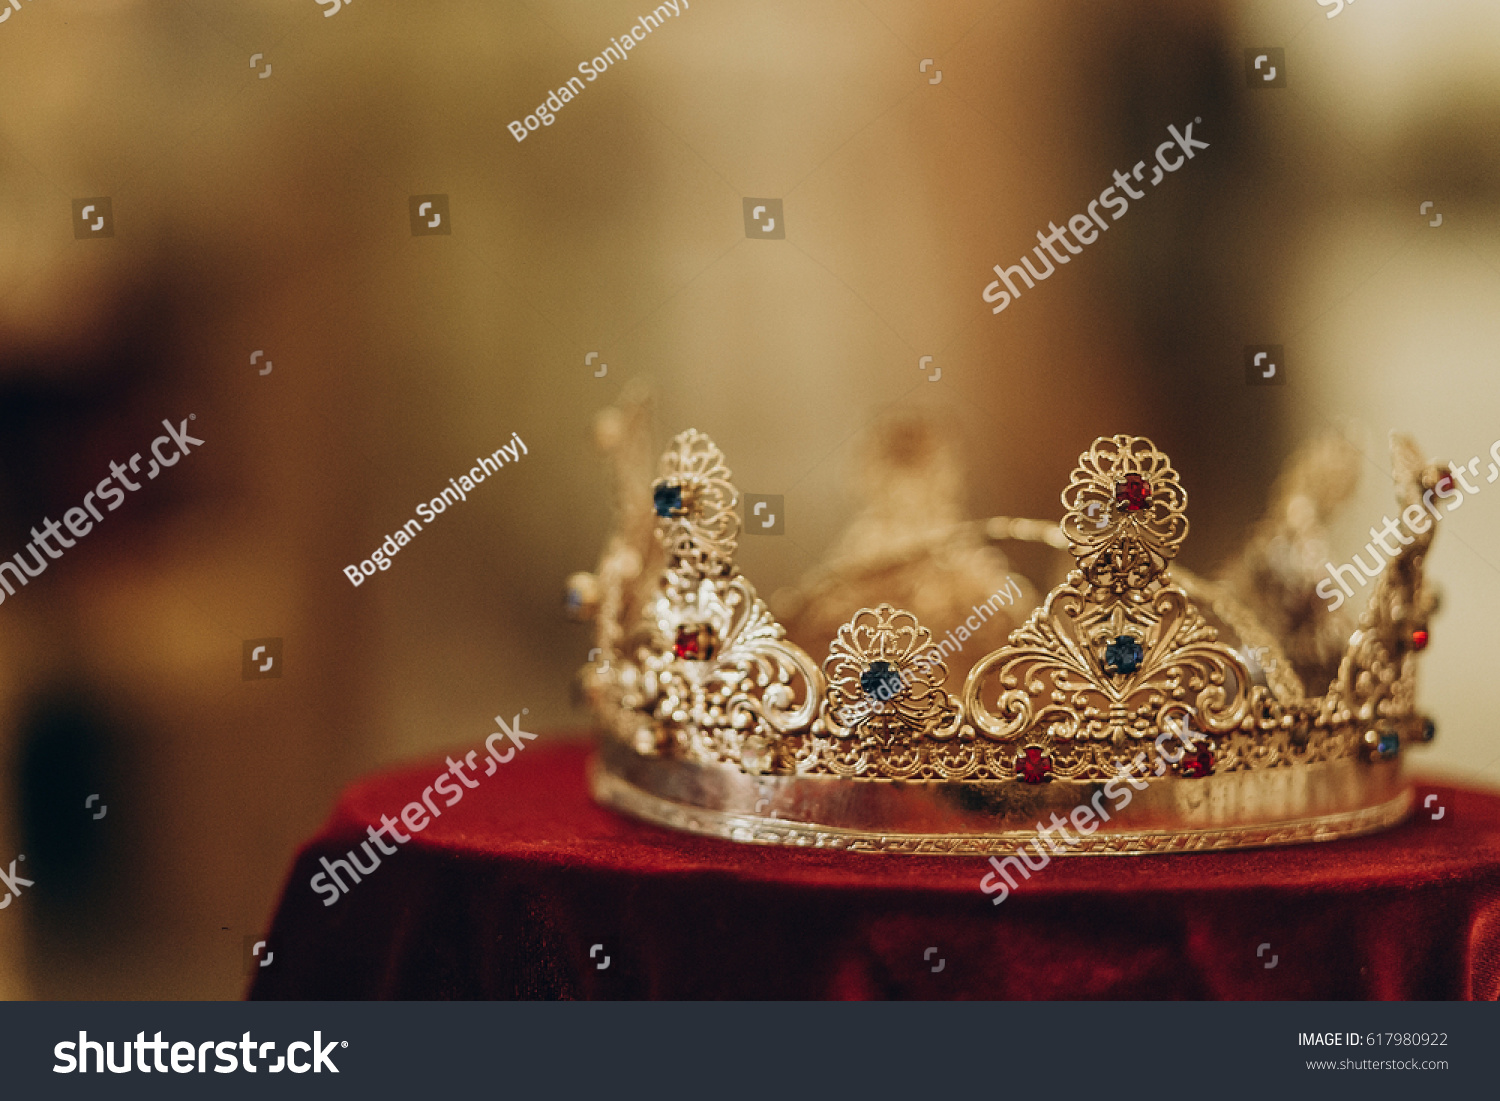 33,004 Crown life Images, Stock Photos & Vectors | Shutterstock